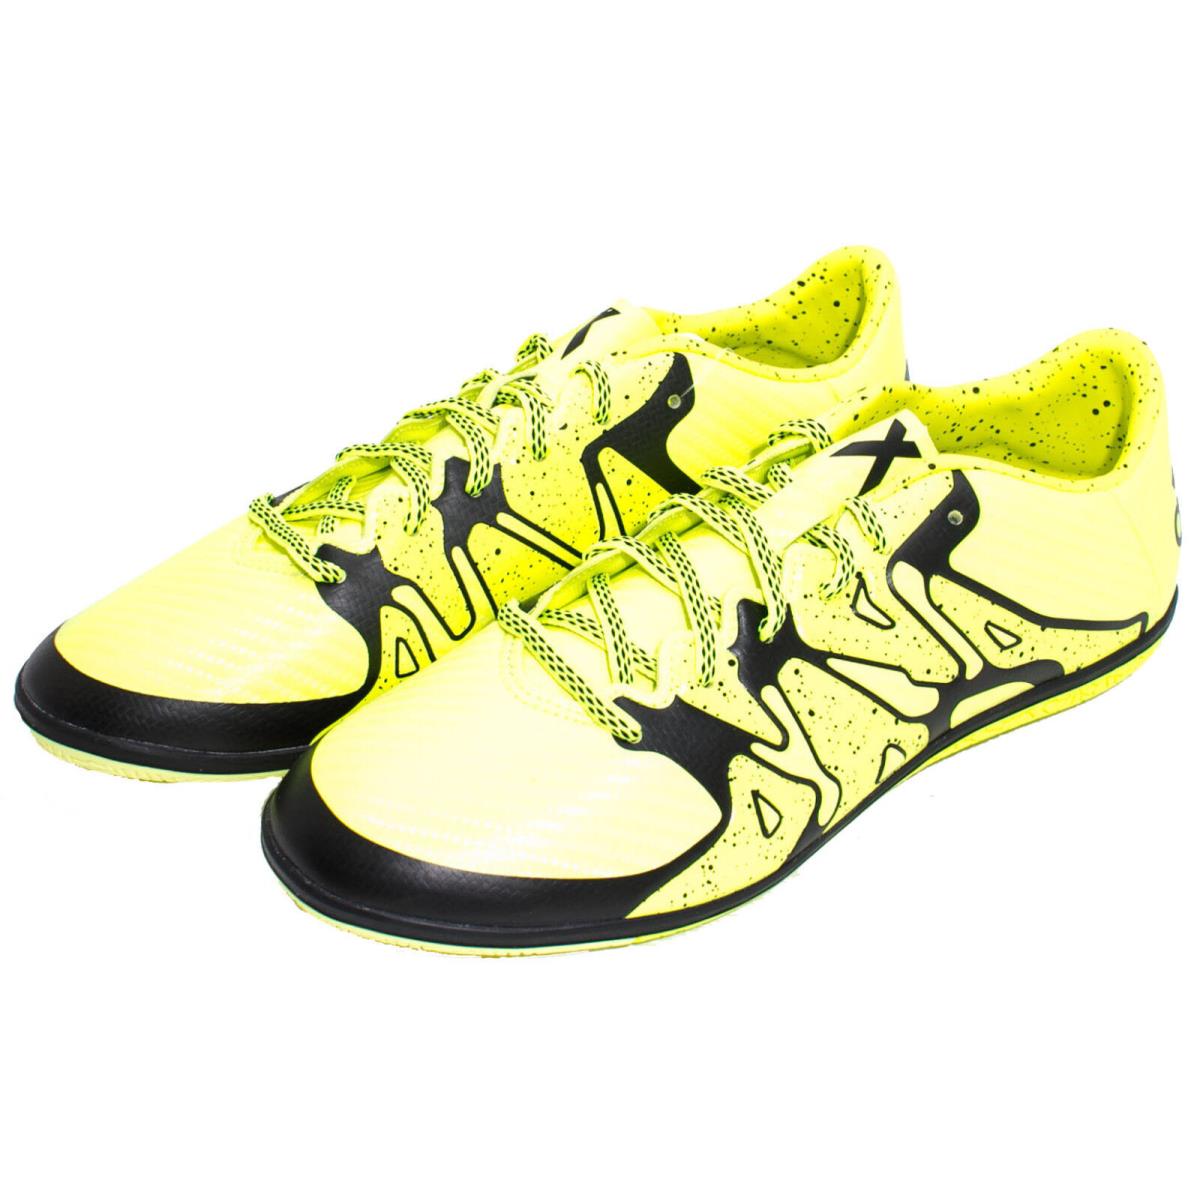 Adidas Performance Men`s X 15.3 IN Soccer Shoe B32997 Yellow/black Sz 9